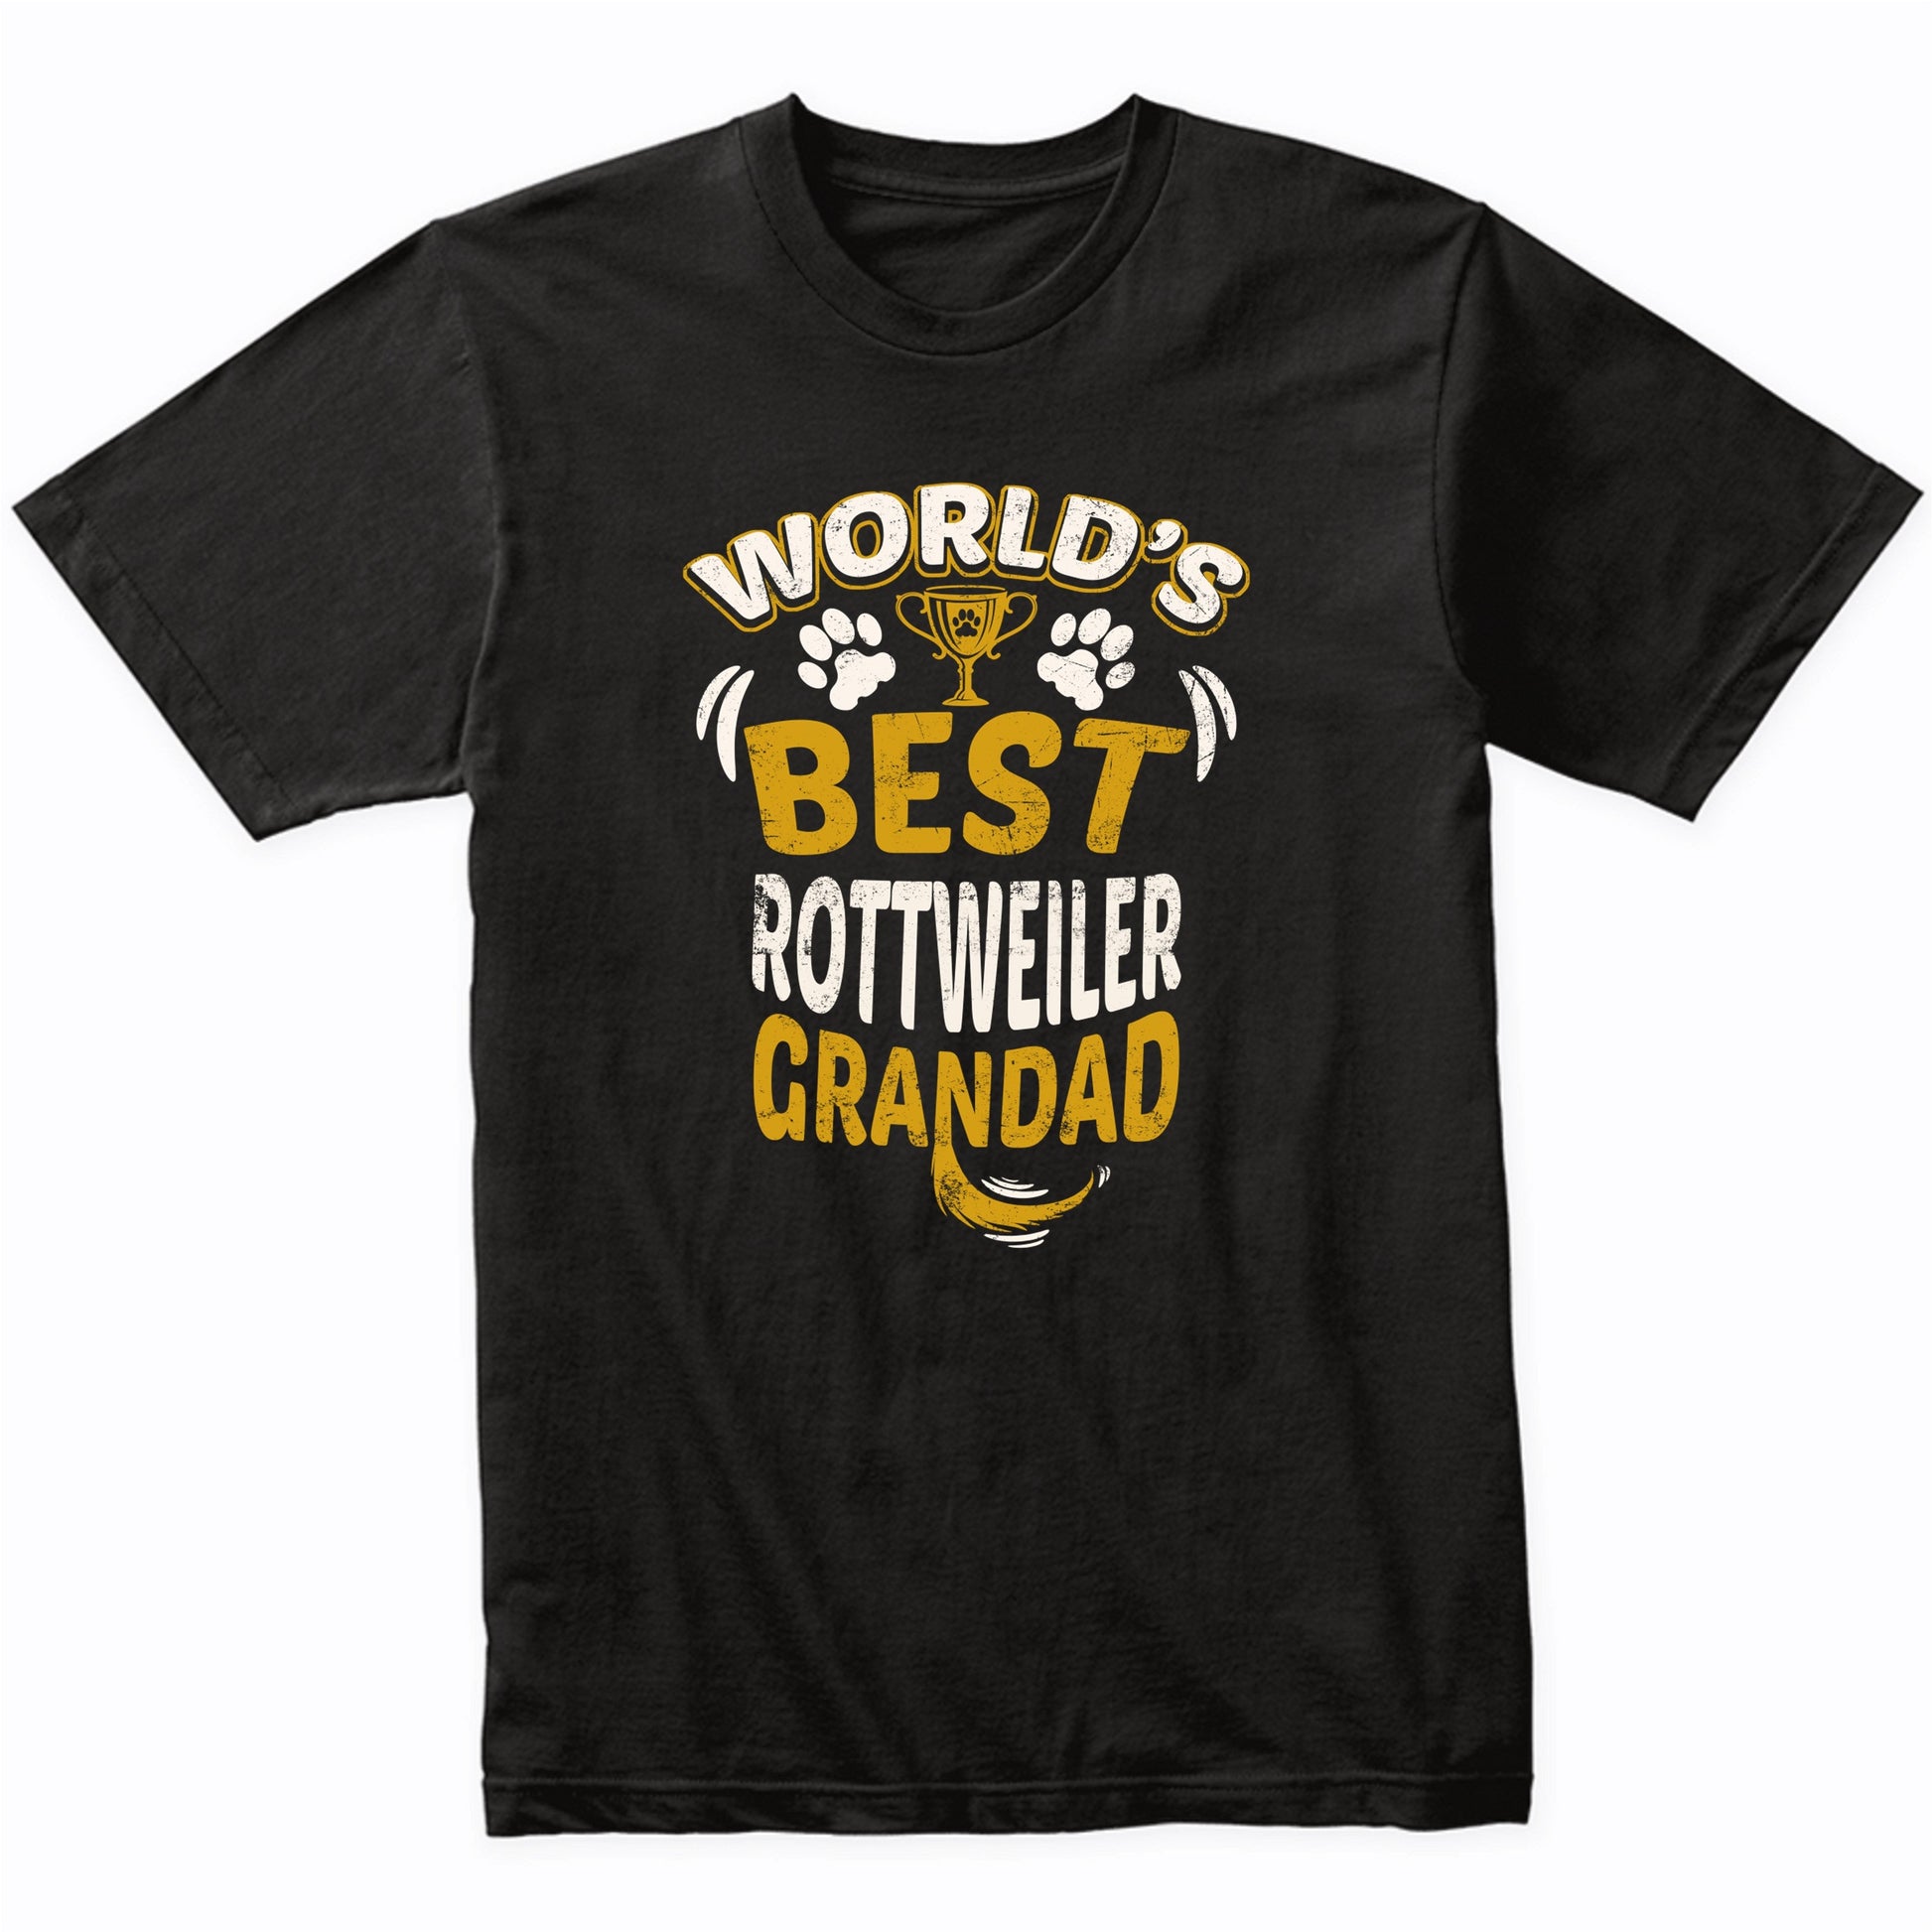 World's Best Rottweiler Grandad Graphic T-Shirt